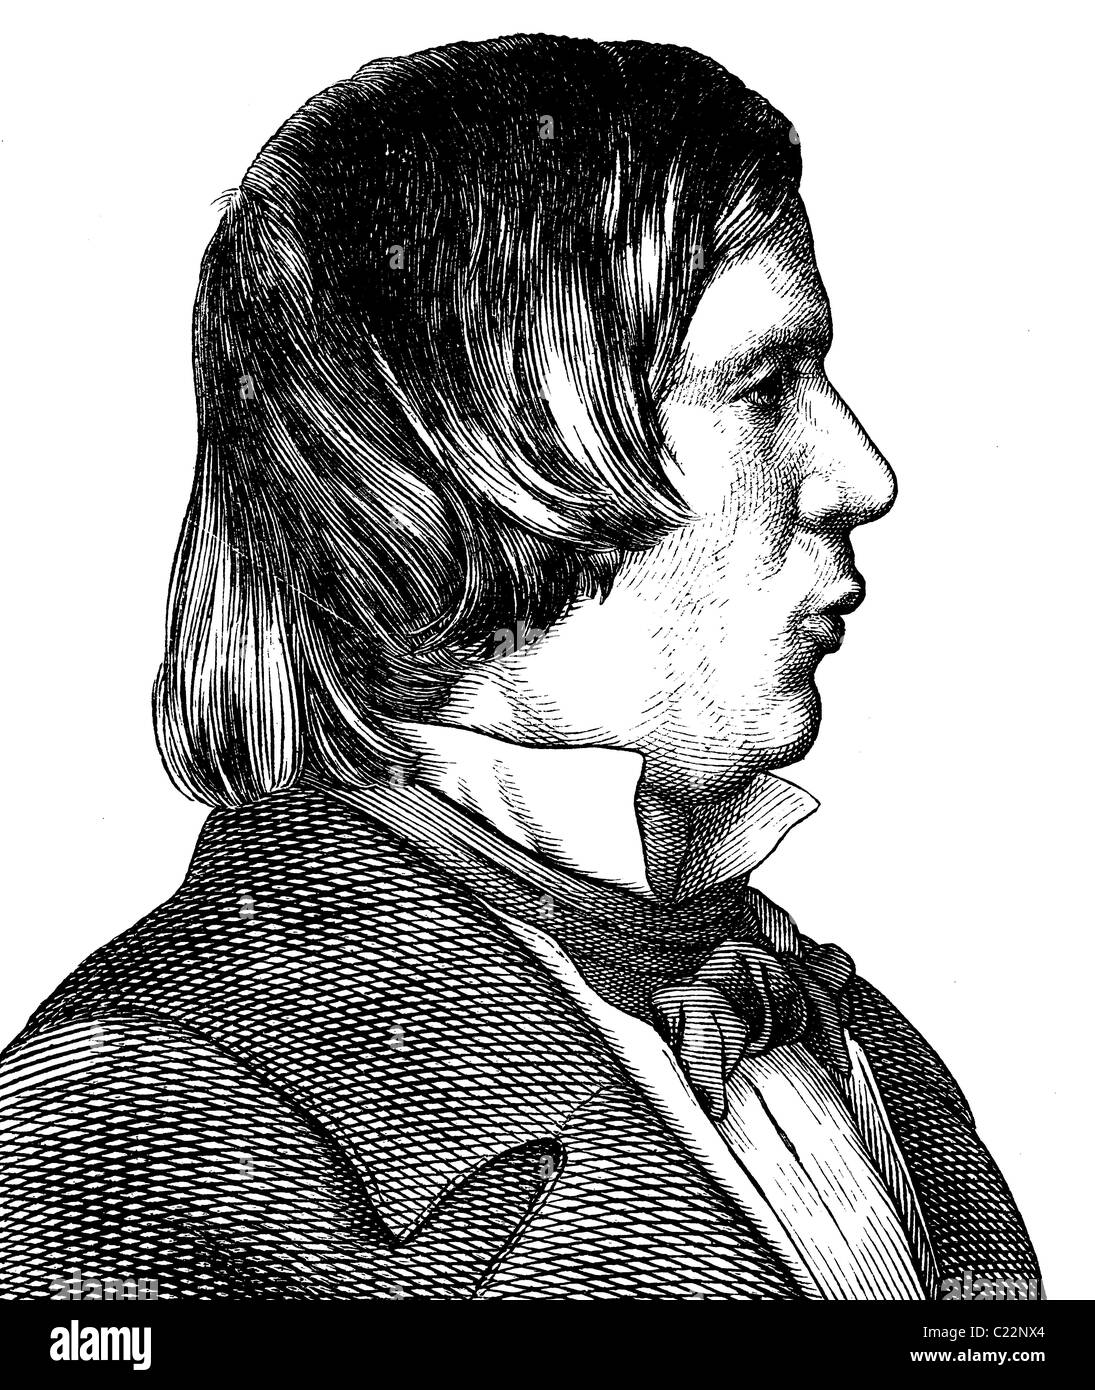 Digital improved image of Robert Schumann, 1810 - 1856, composer, Portrait, historical illustration, 1880 Stock Photo